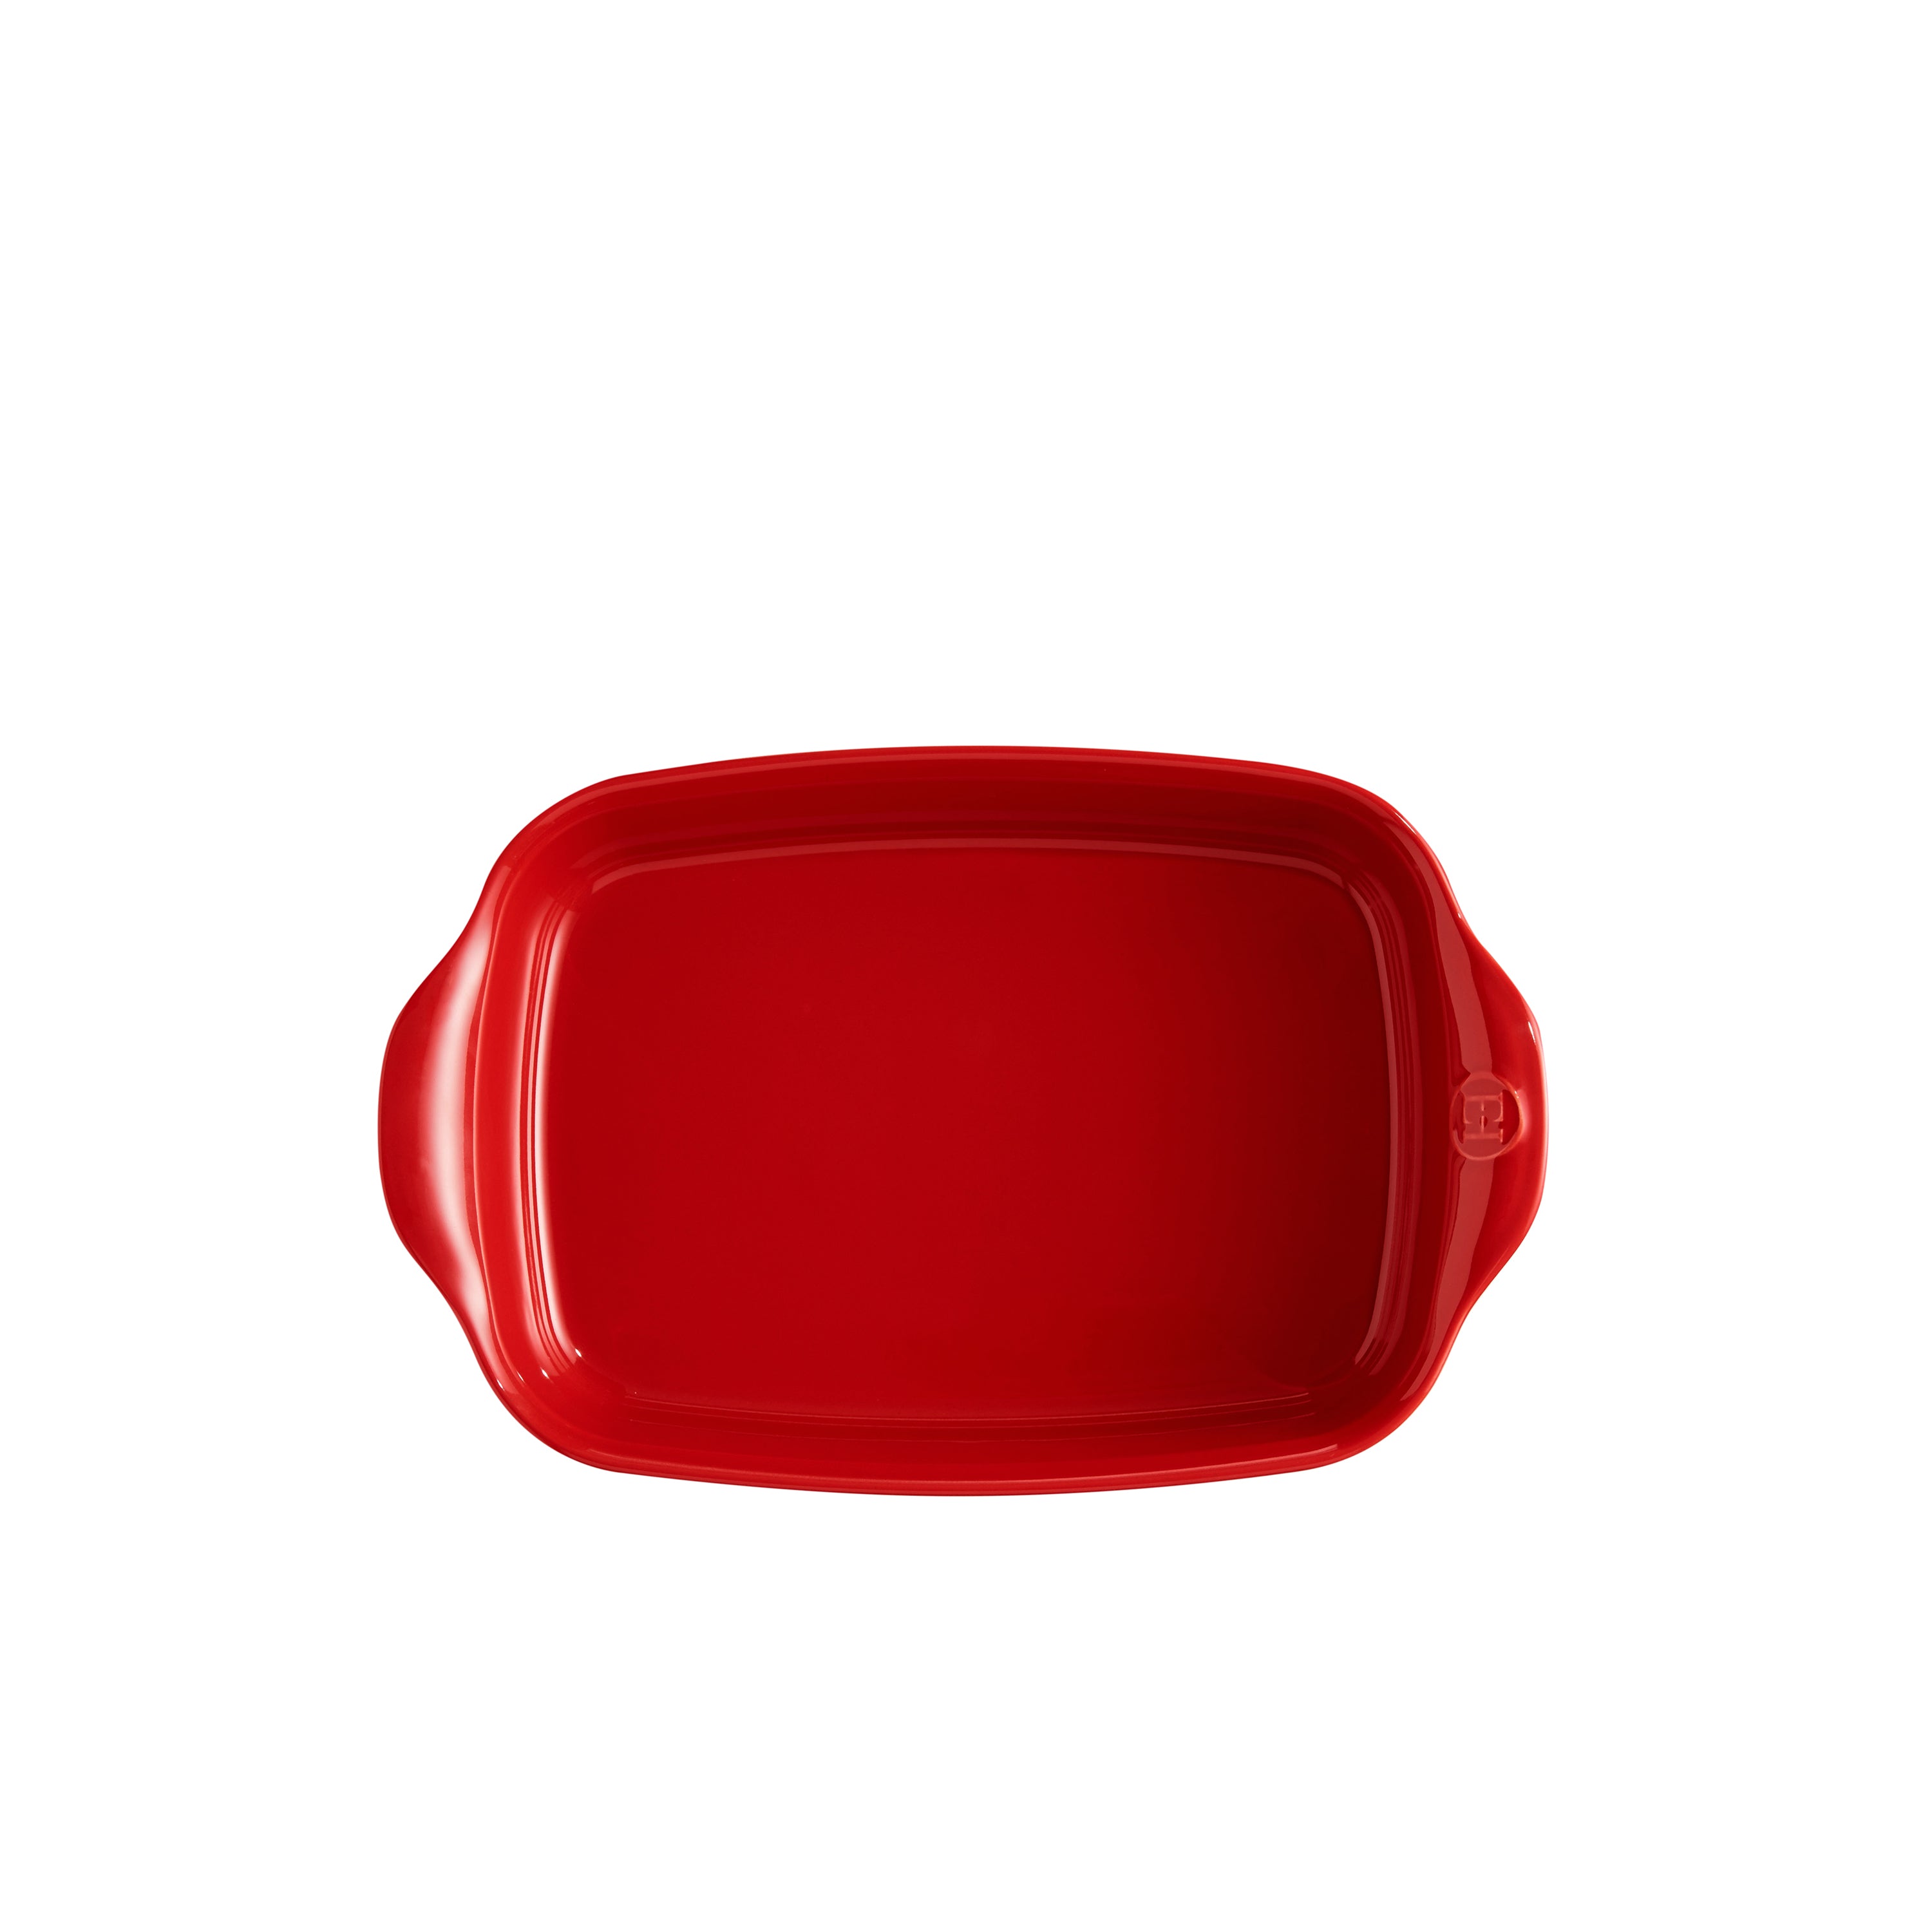 Emile Henry Small Rectangular Baking Dish 21.5 cm, Red